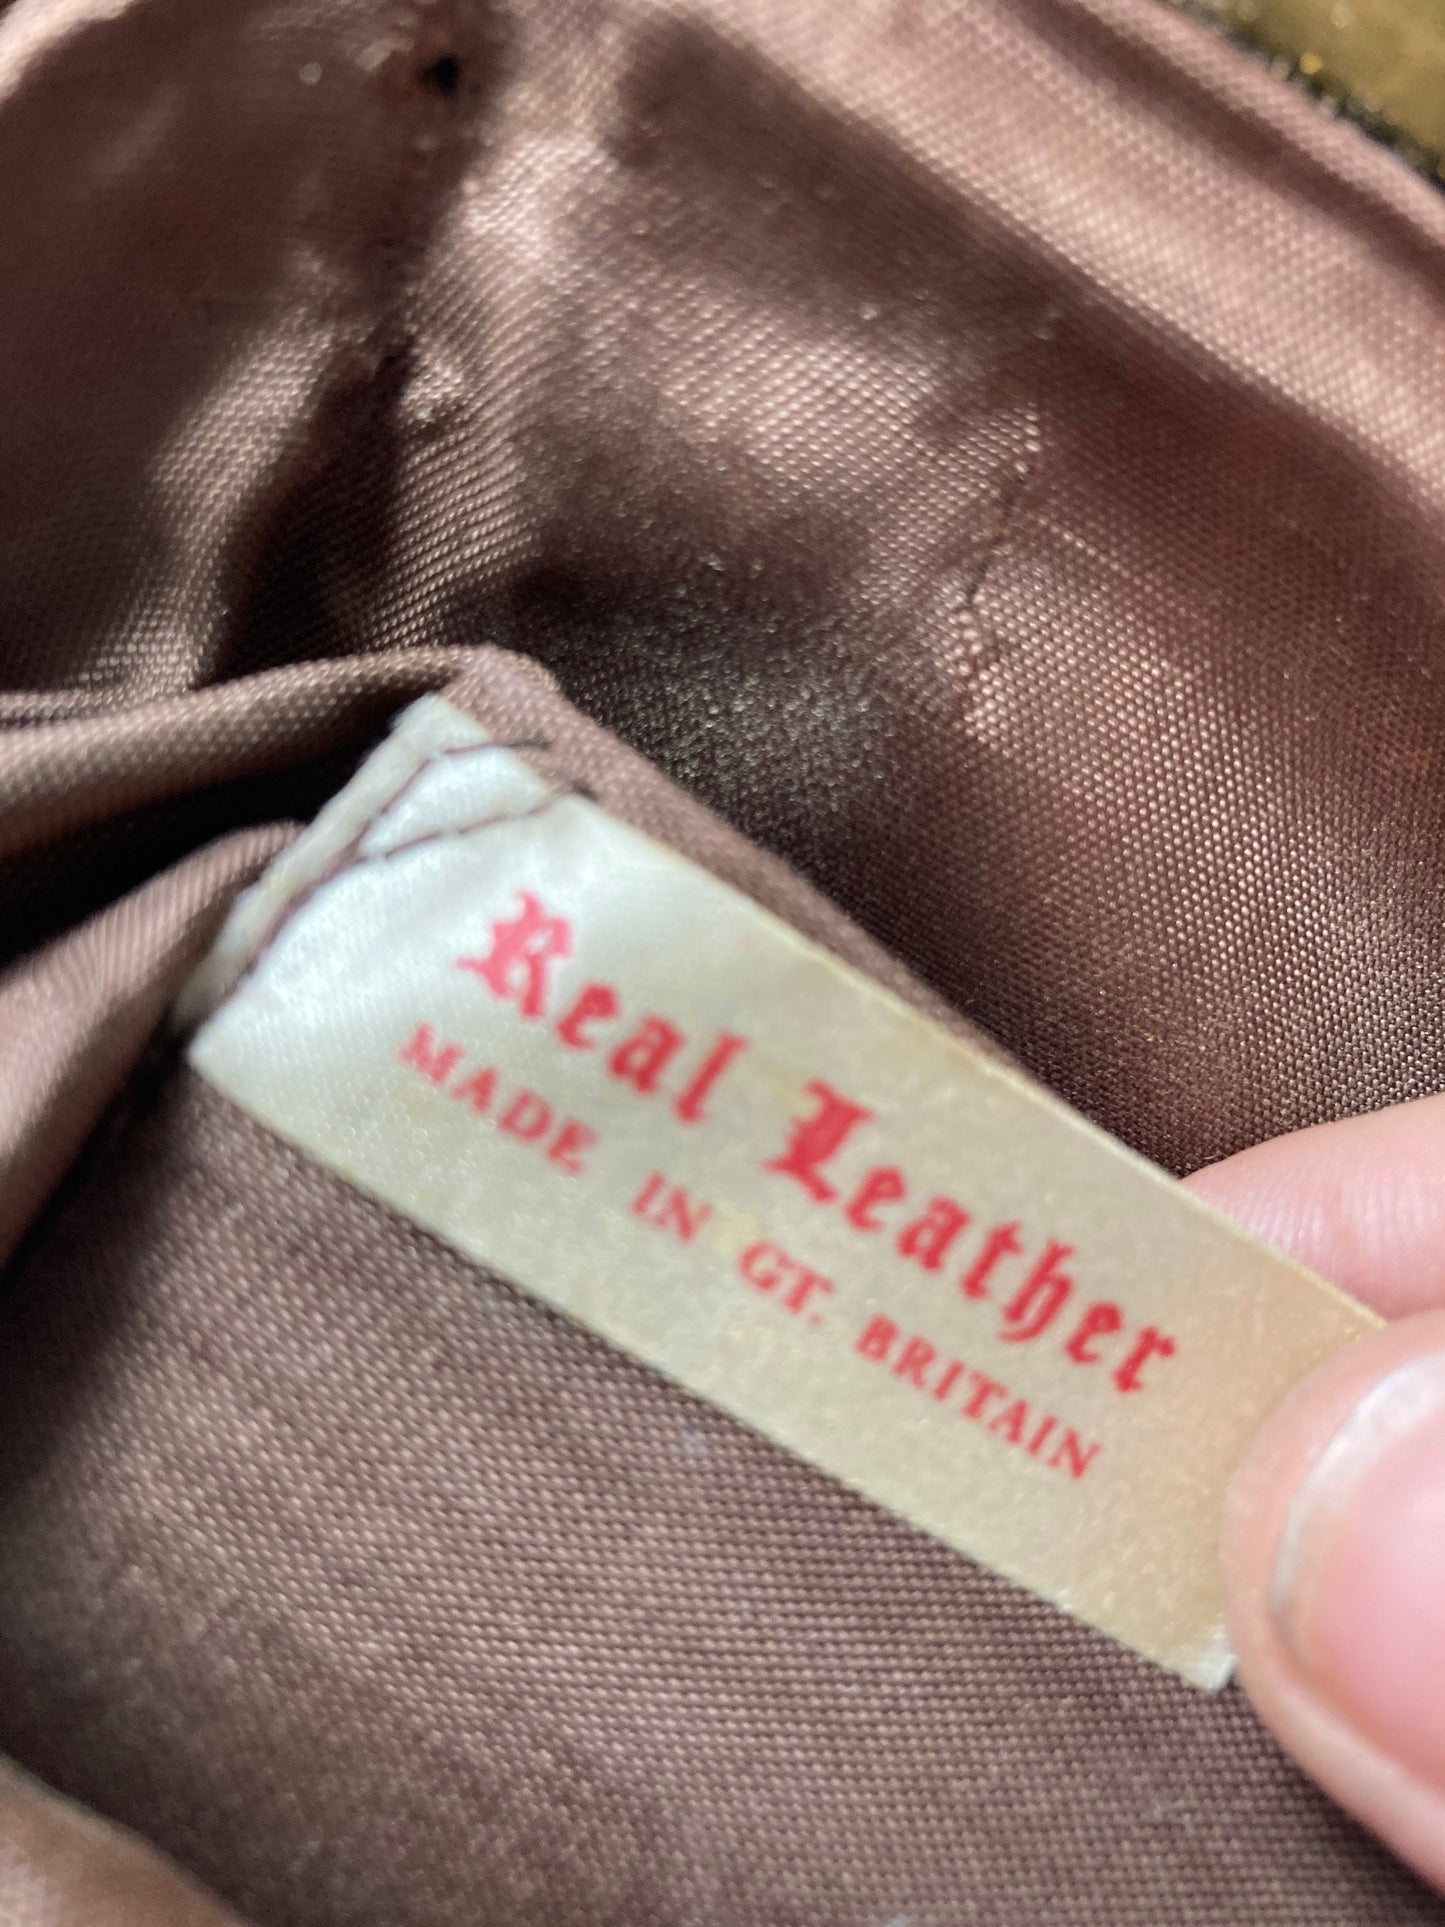 Antique Vintage 1930s to 1950s brown suede leather deep Evening Purse day Bag Handbag